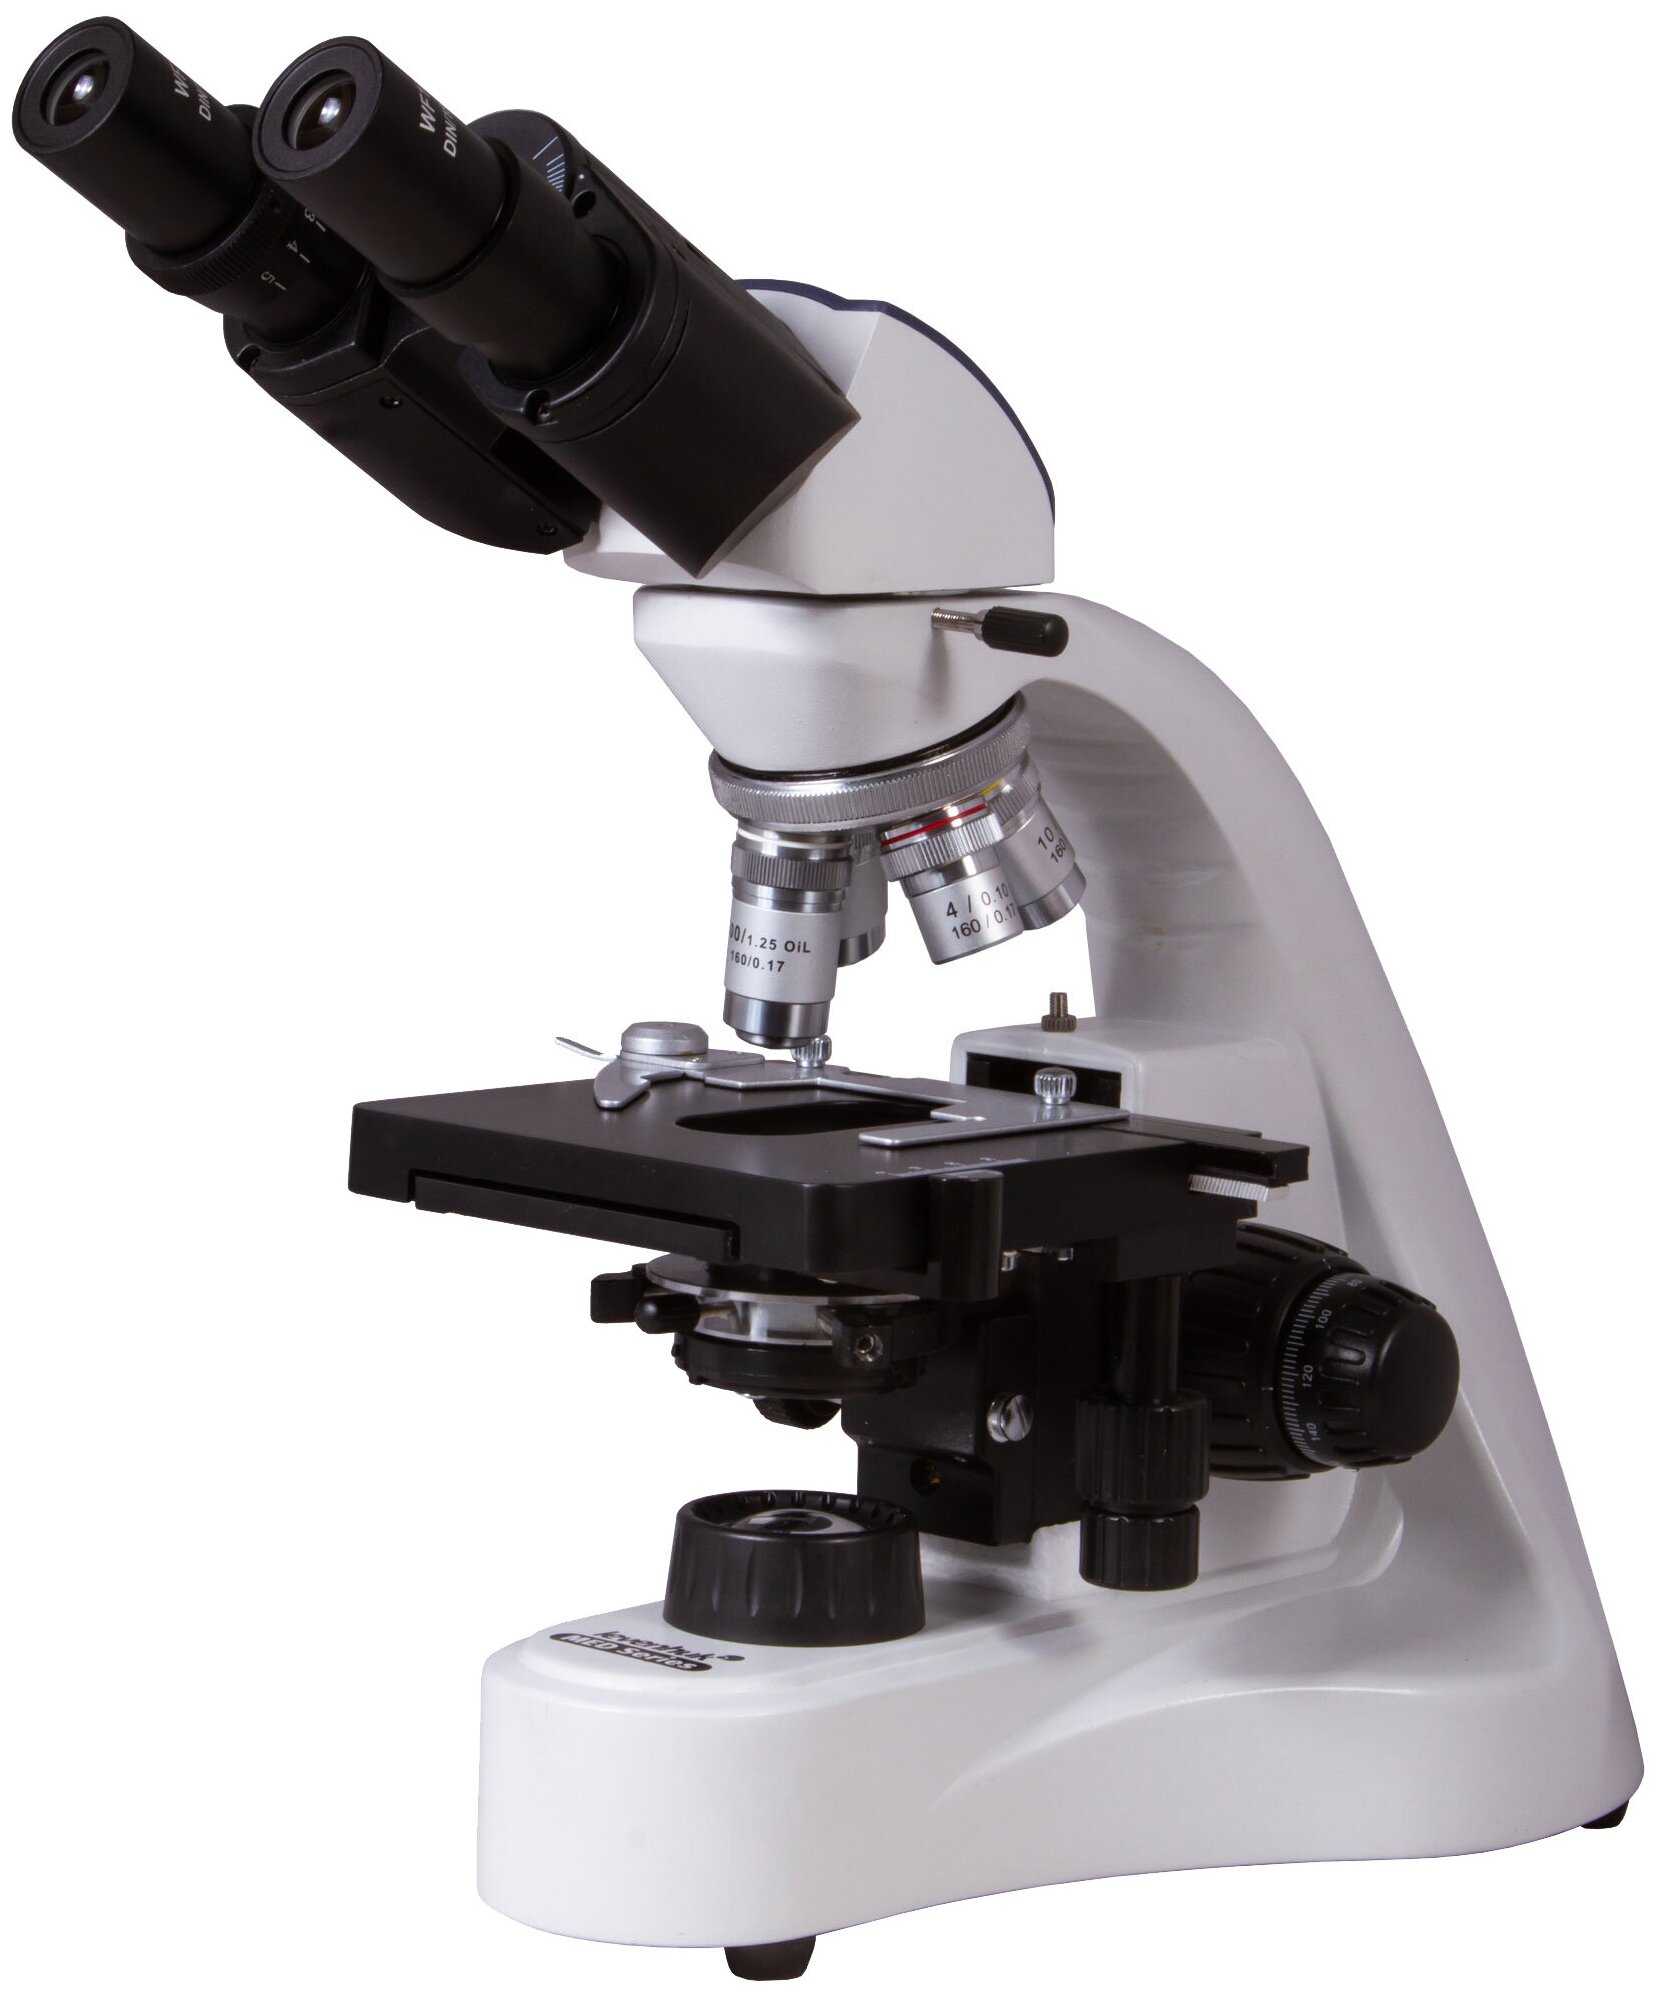 Микроскоп LEVENHUK MED 10B белый